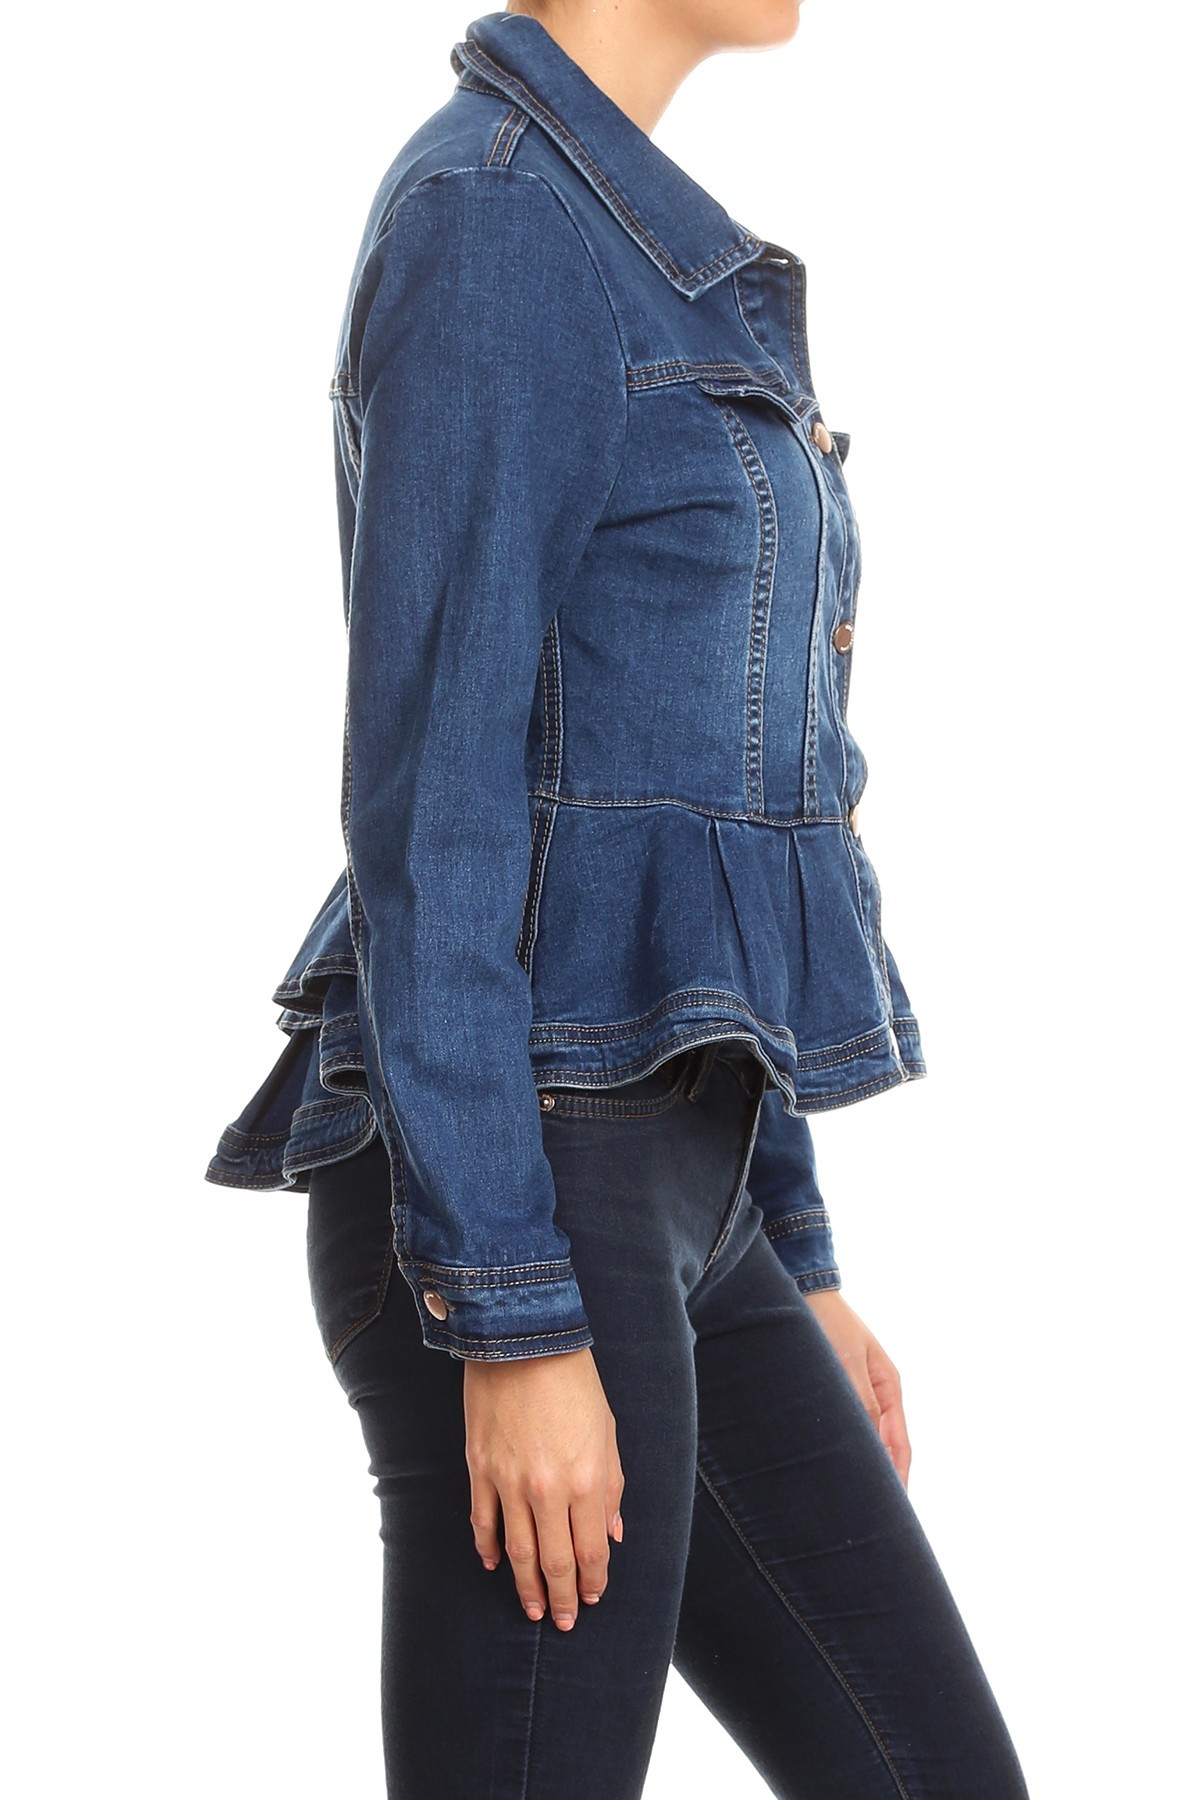 Fashion2Love Women's Plus / Juniors Size Premium Denim Premium Bodice Long Sleeve Jacket - image 3 of 8